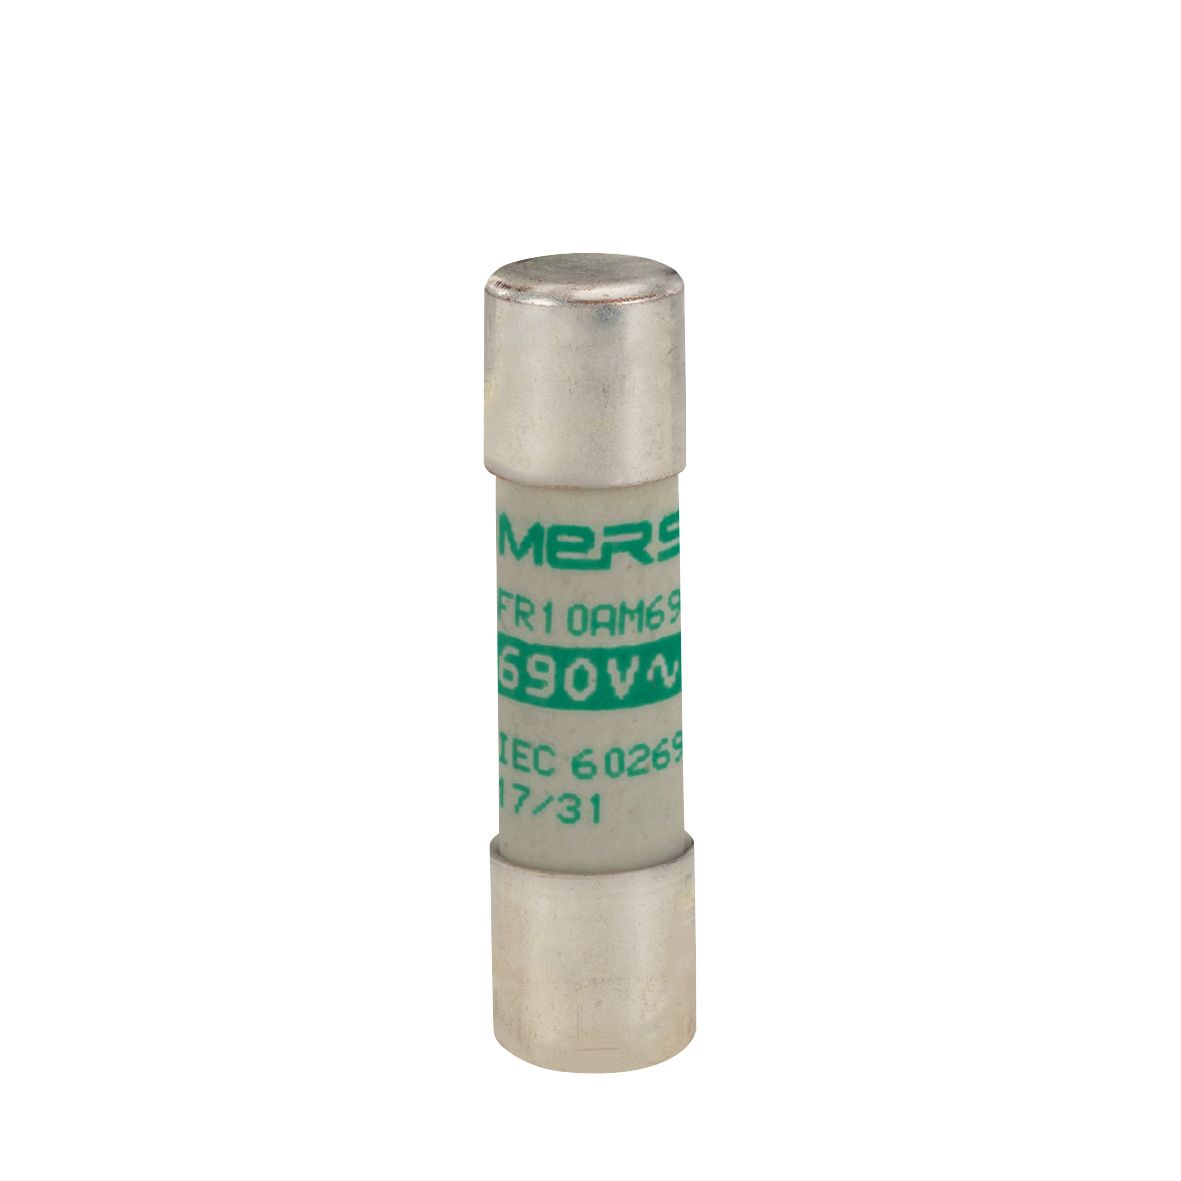 H302779 - Cylindrical fuse-link aM 690VAC 10.3x38, 1A